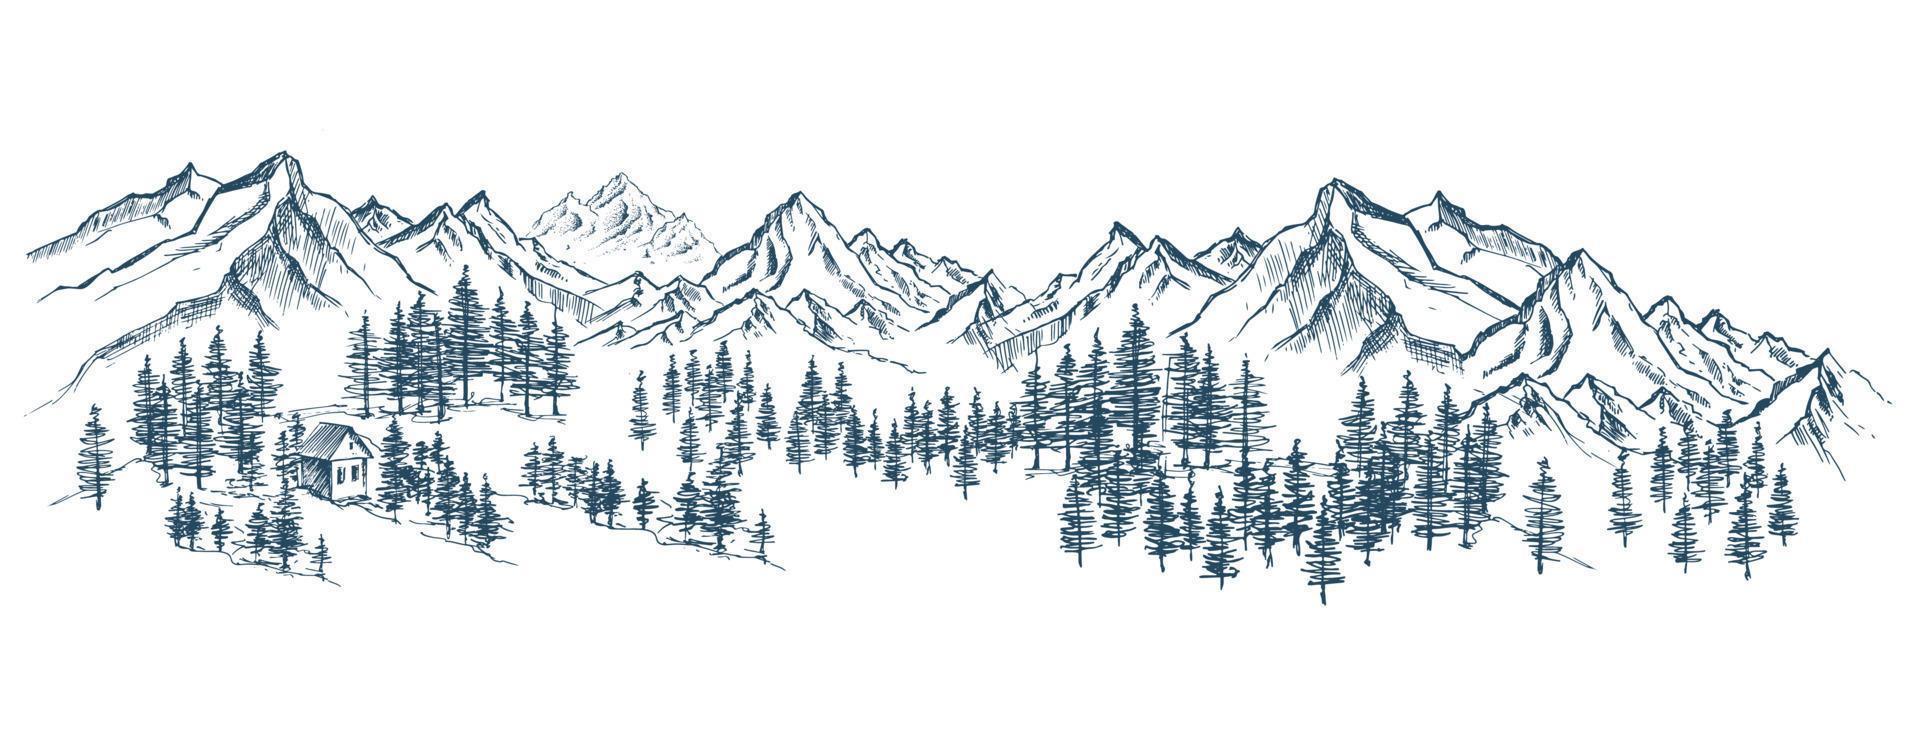 Mountain landscape, hand drawn illustration vector